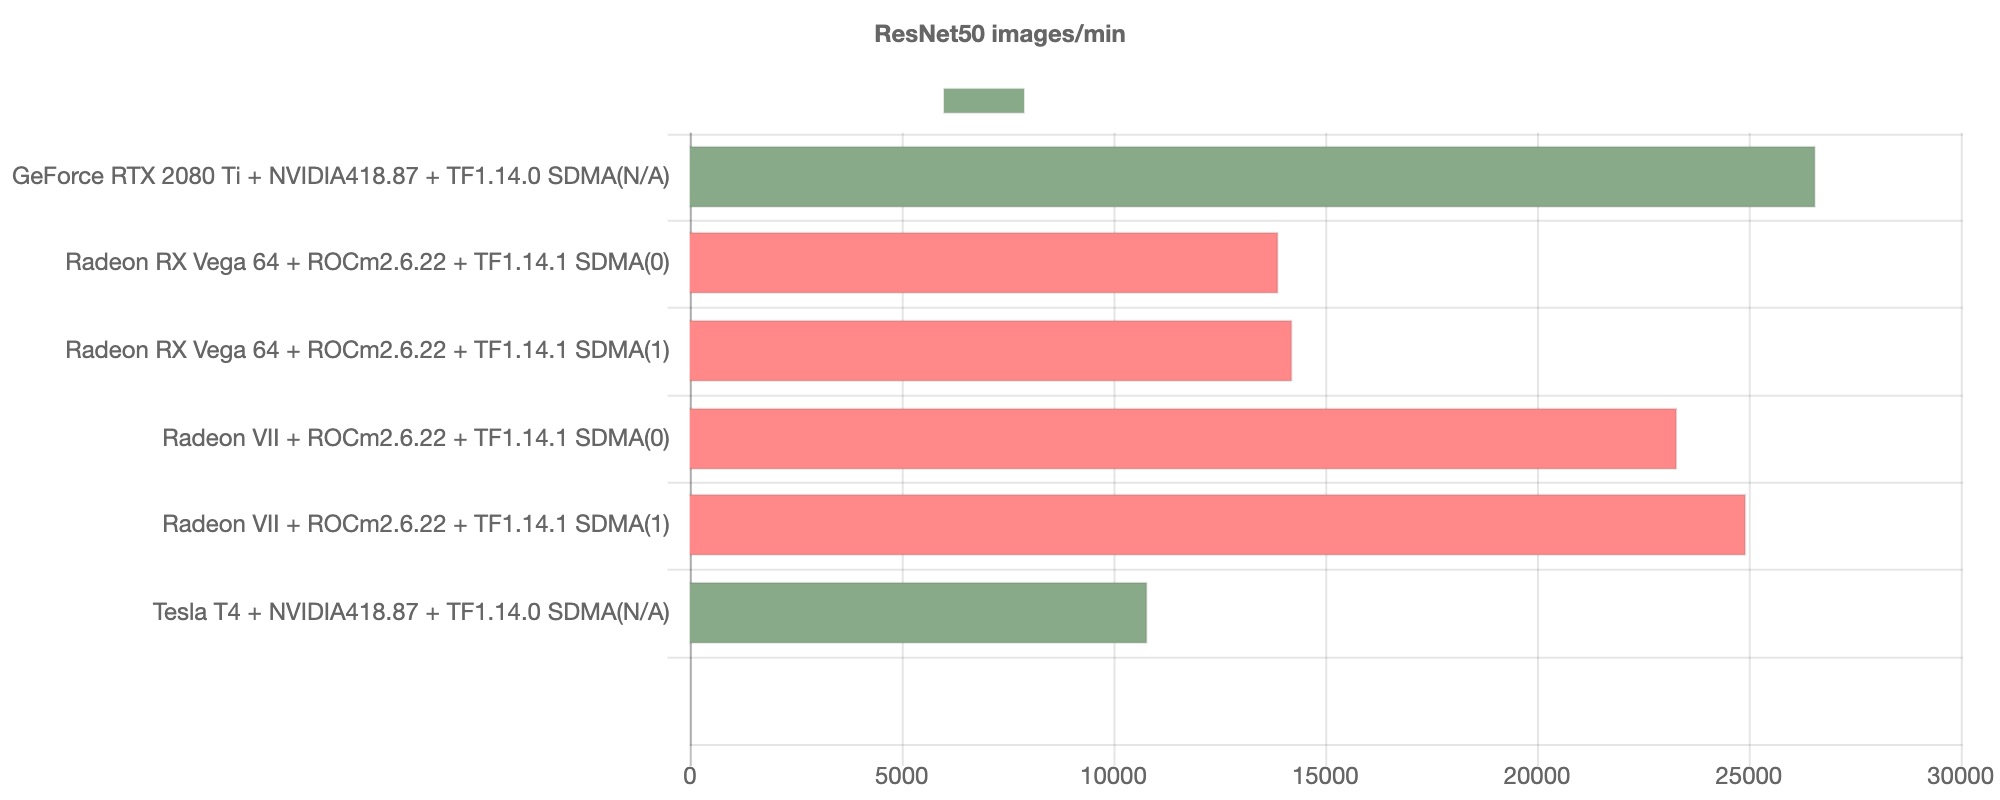 image from ROCmとNVIDIAベンチマークの比較(推論)